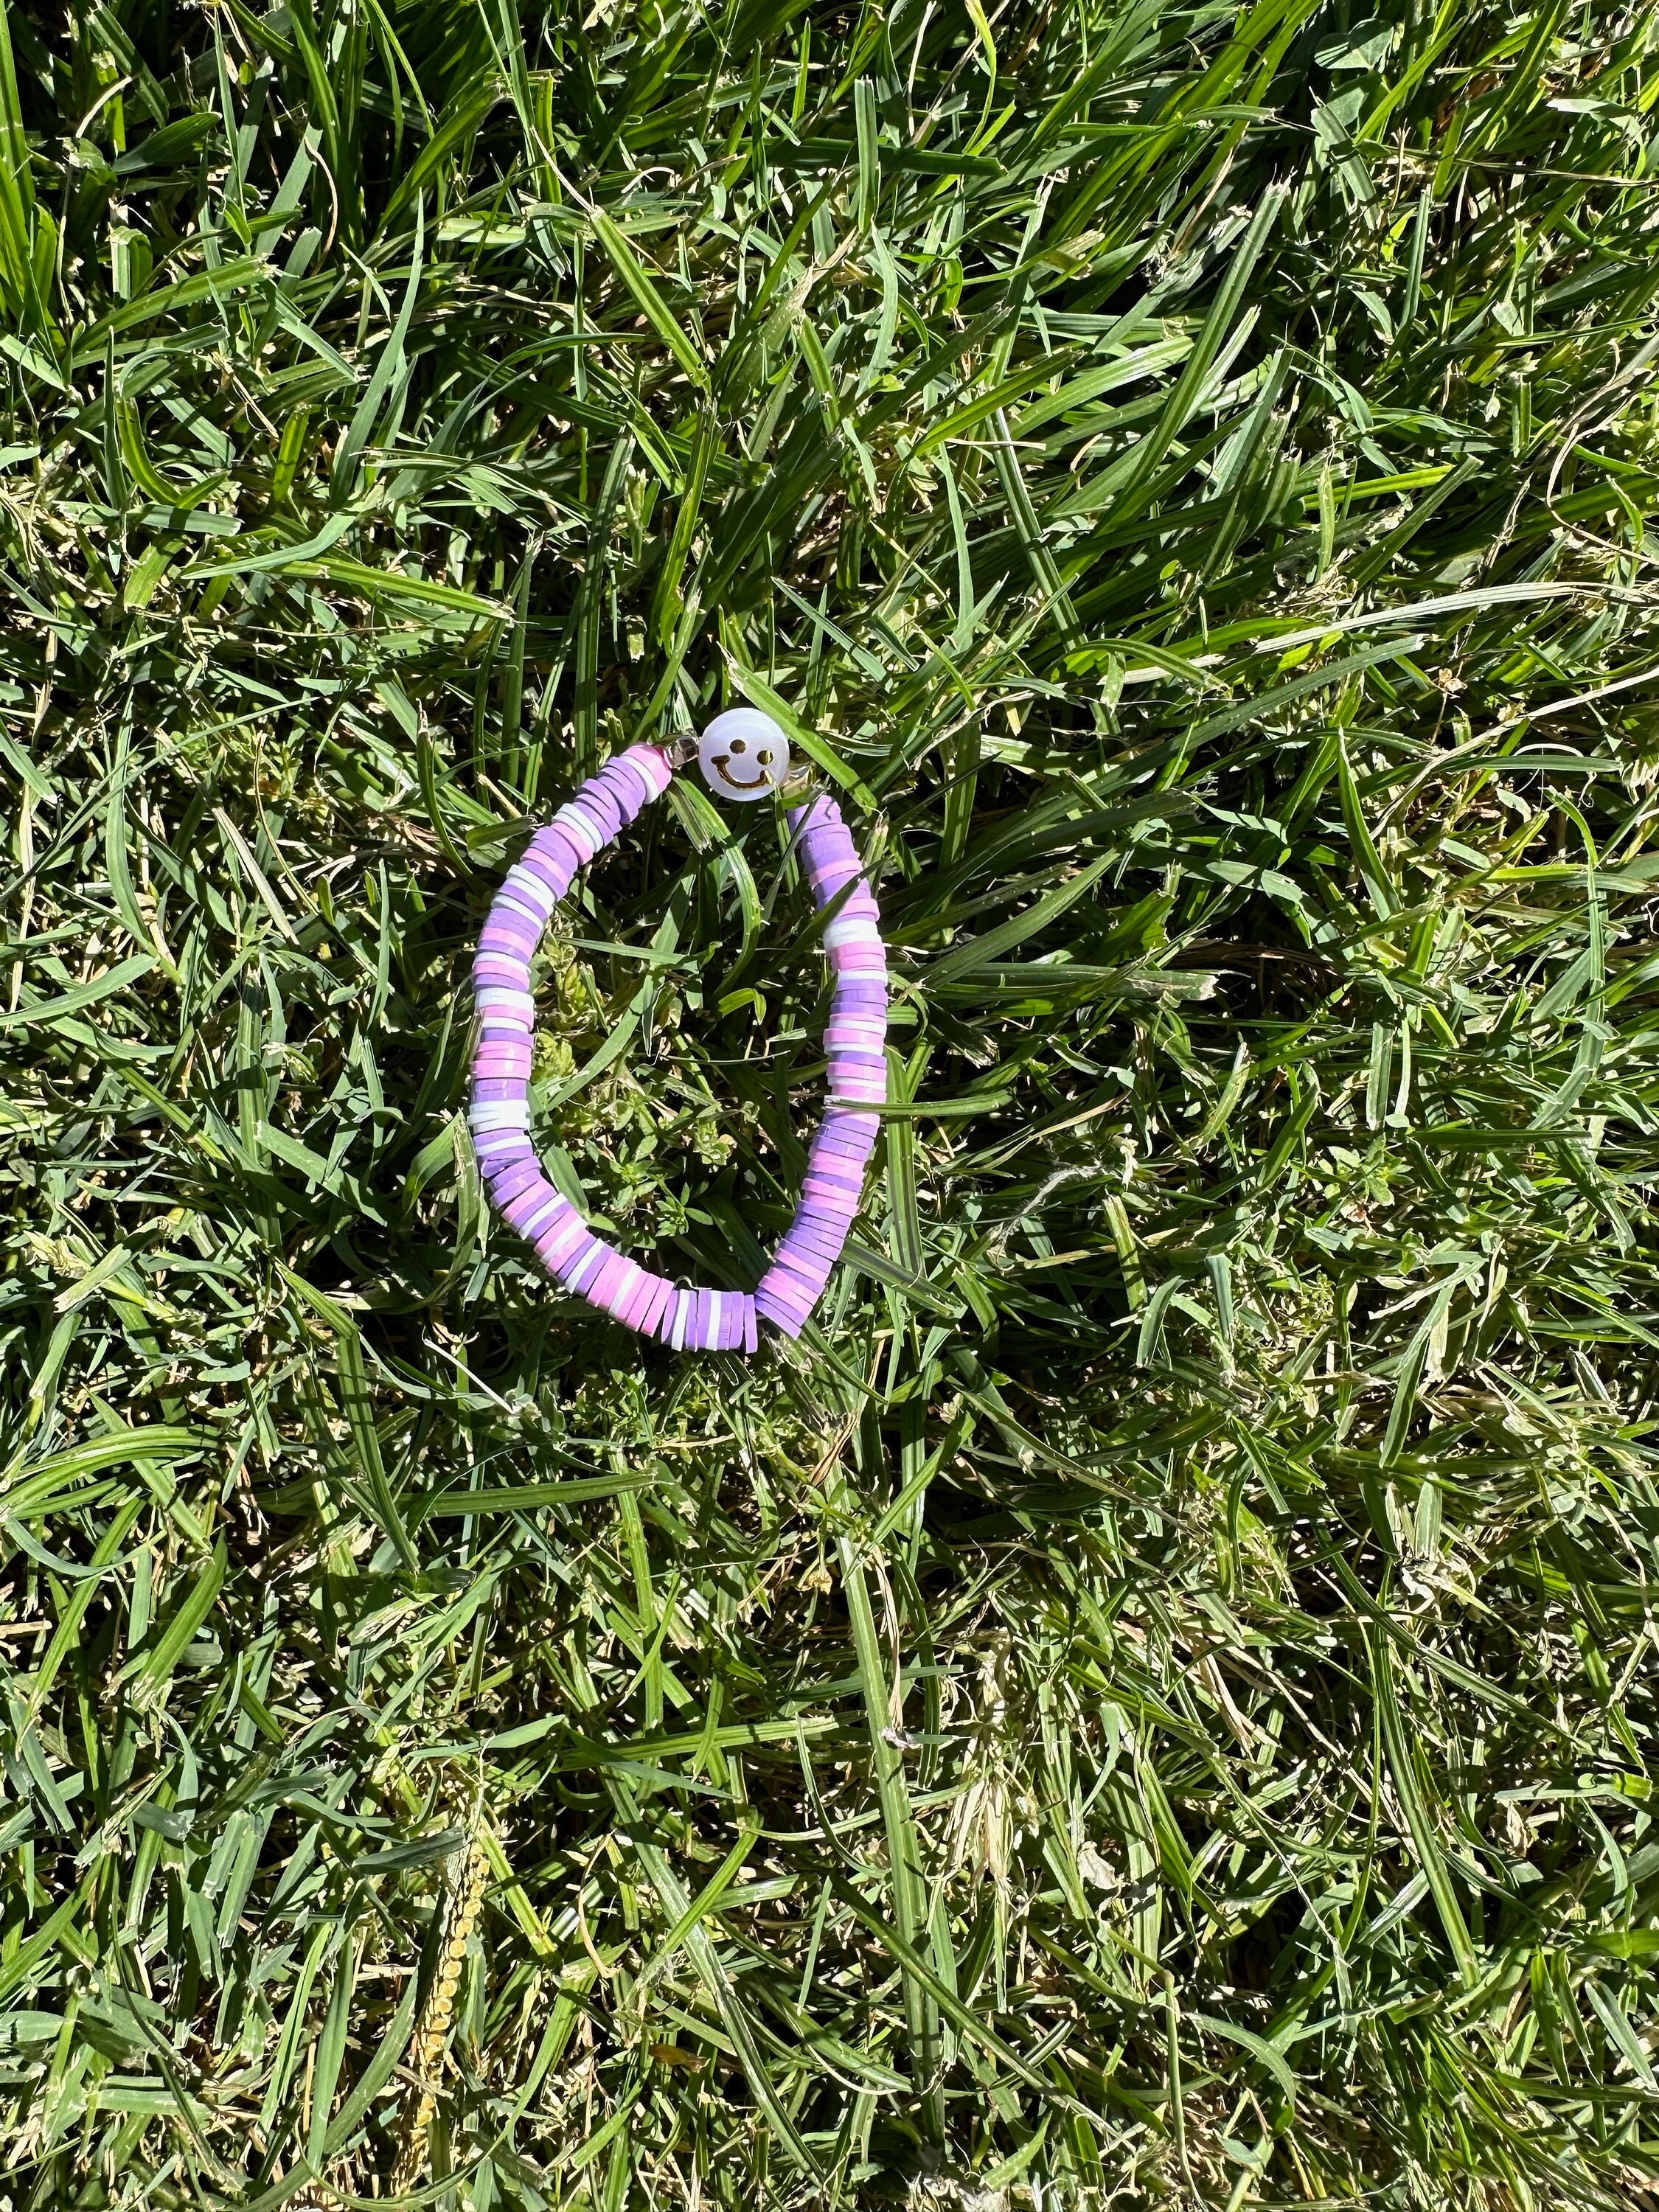 Iooleem 2000+pcs Dark Purple Clay Beads, Polymer Clay Beads for Bracelets Making, Clay Beads for Jewelry Making, Clay Beads for Crafts, Bracelet